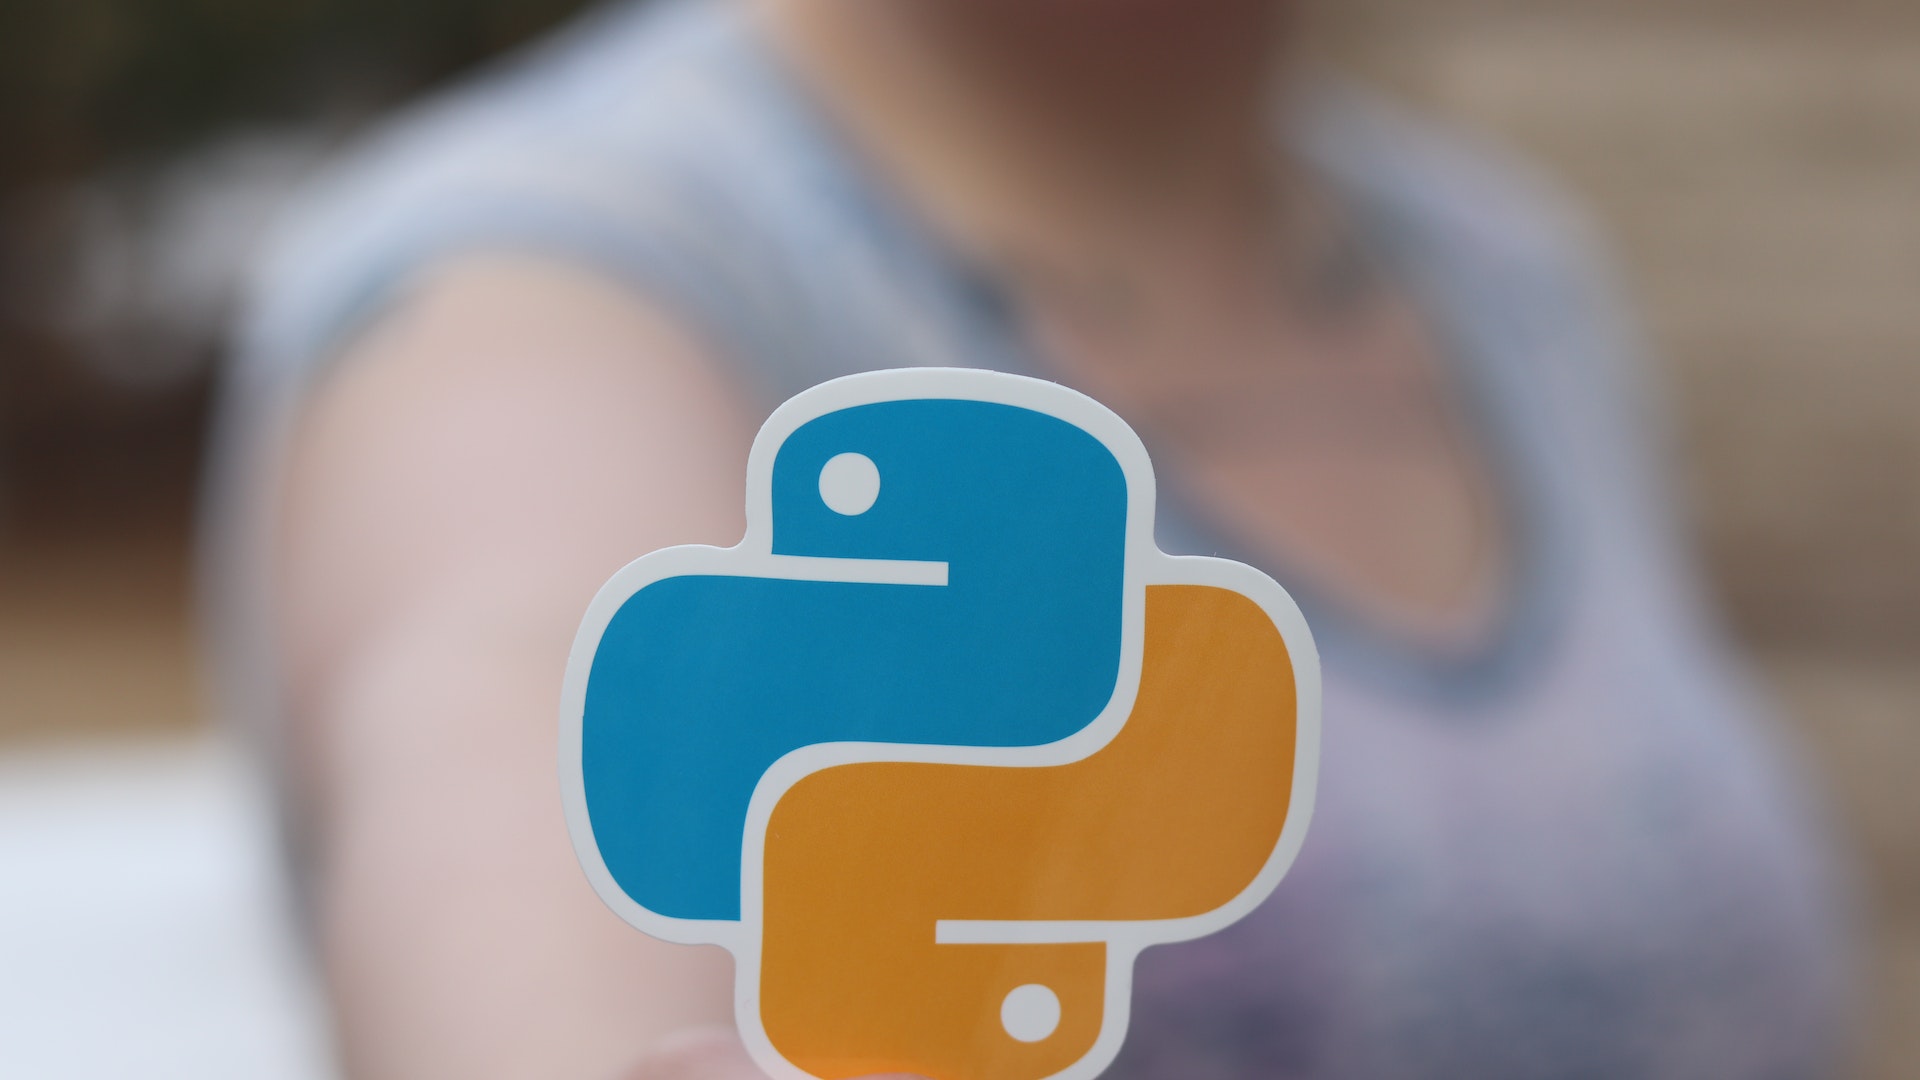 Python- The Programming Language